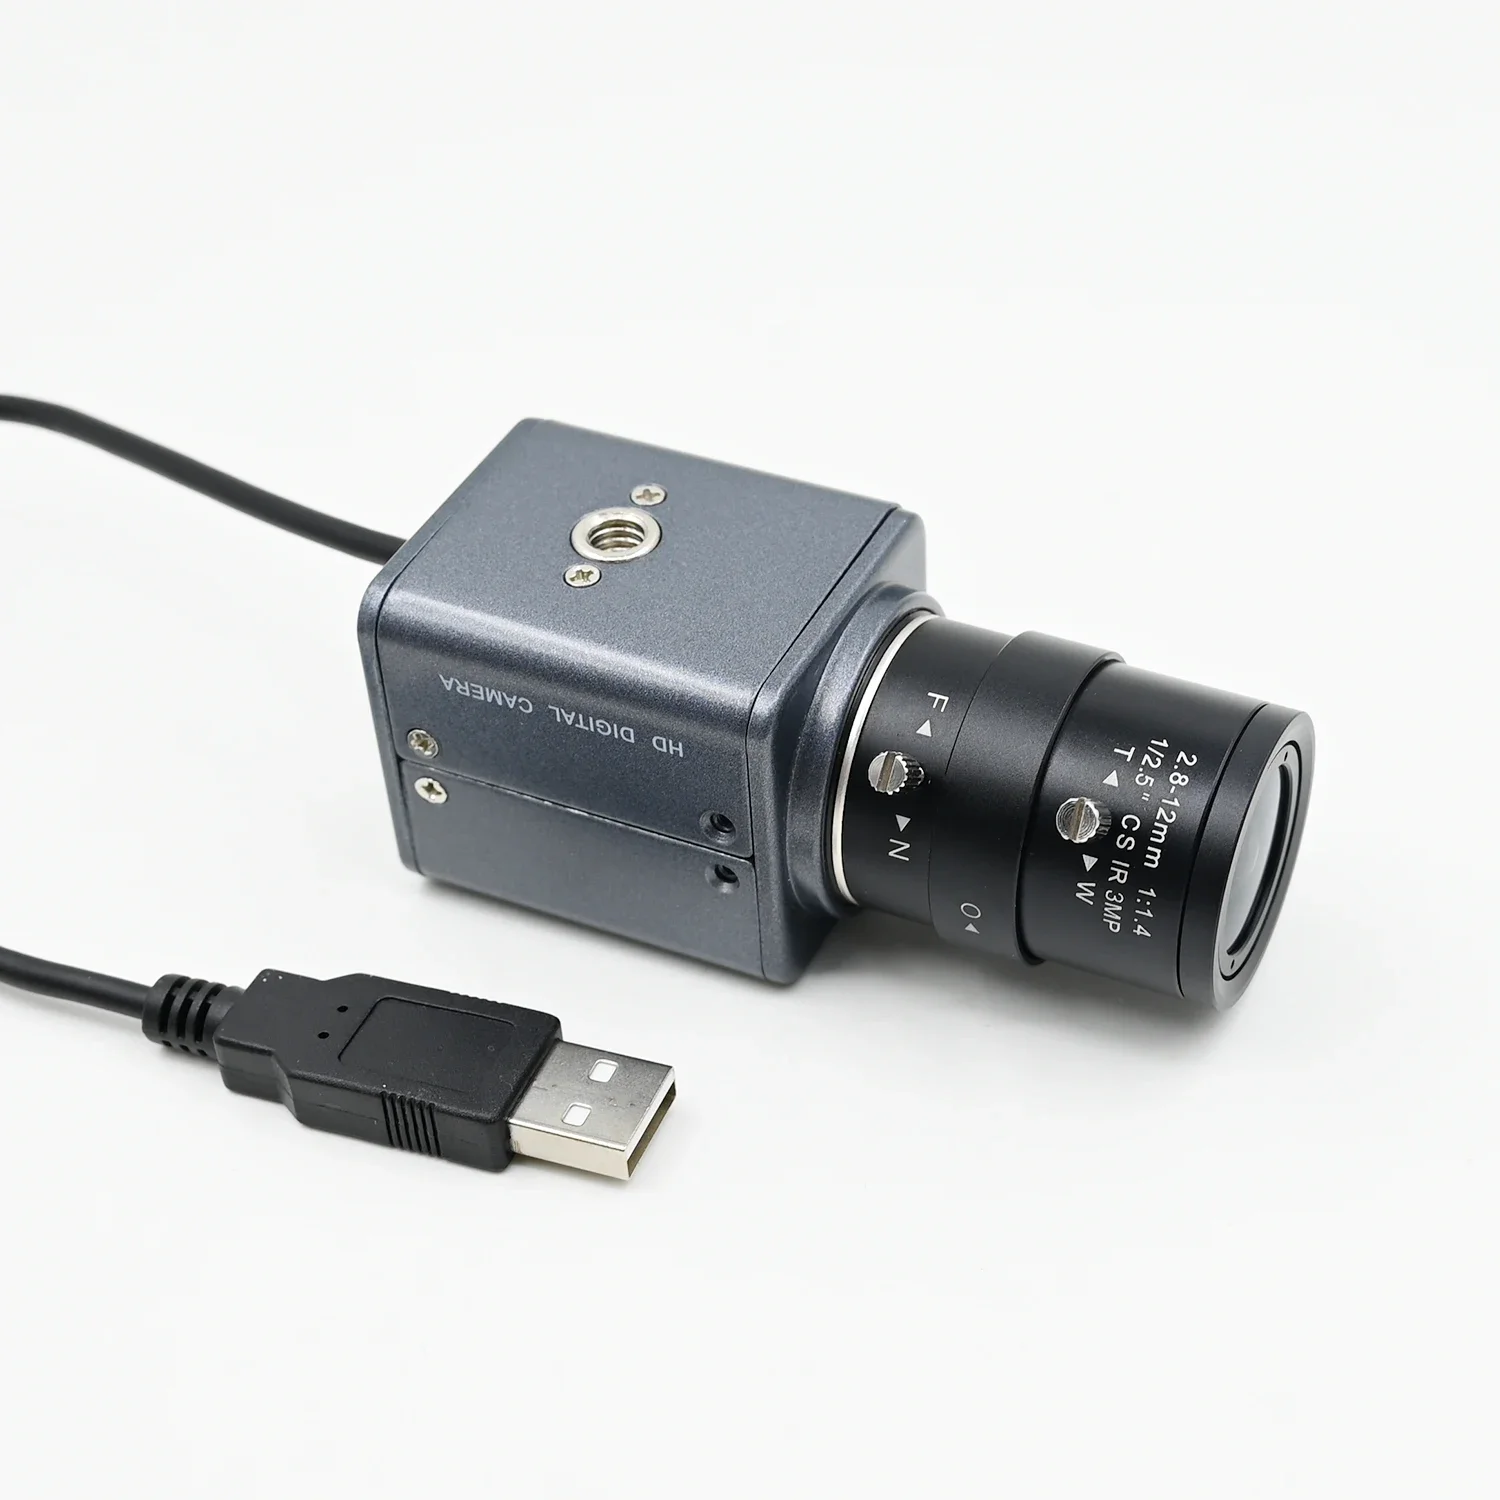 

OV9281 120FPS Global Shutter USB Camera 720P,Monochrome, Housing Webcam,With 5-50mm Varifocal CS Lens,High Frame Rate Capture